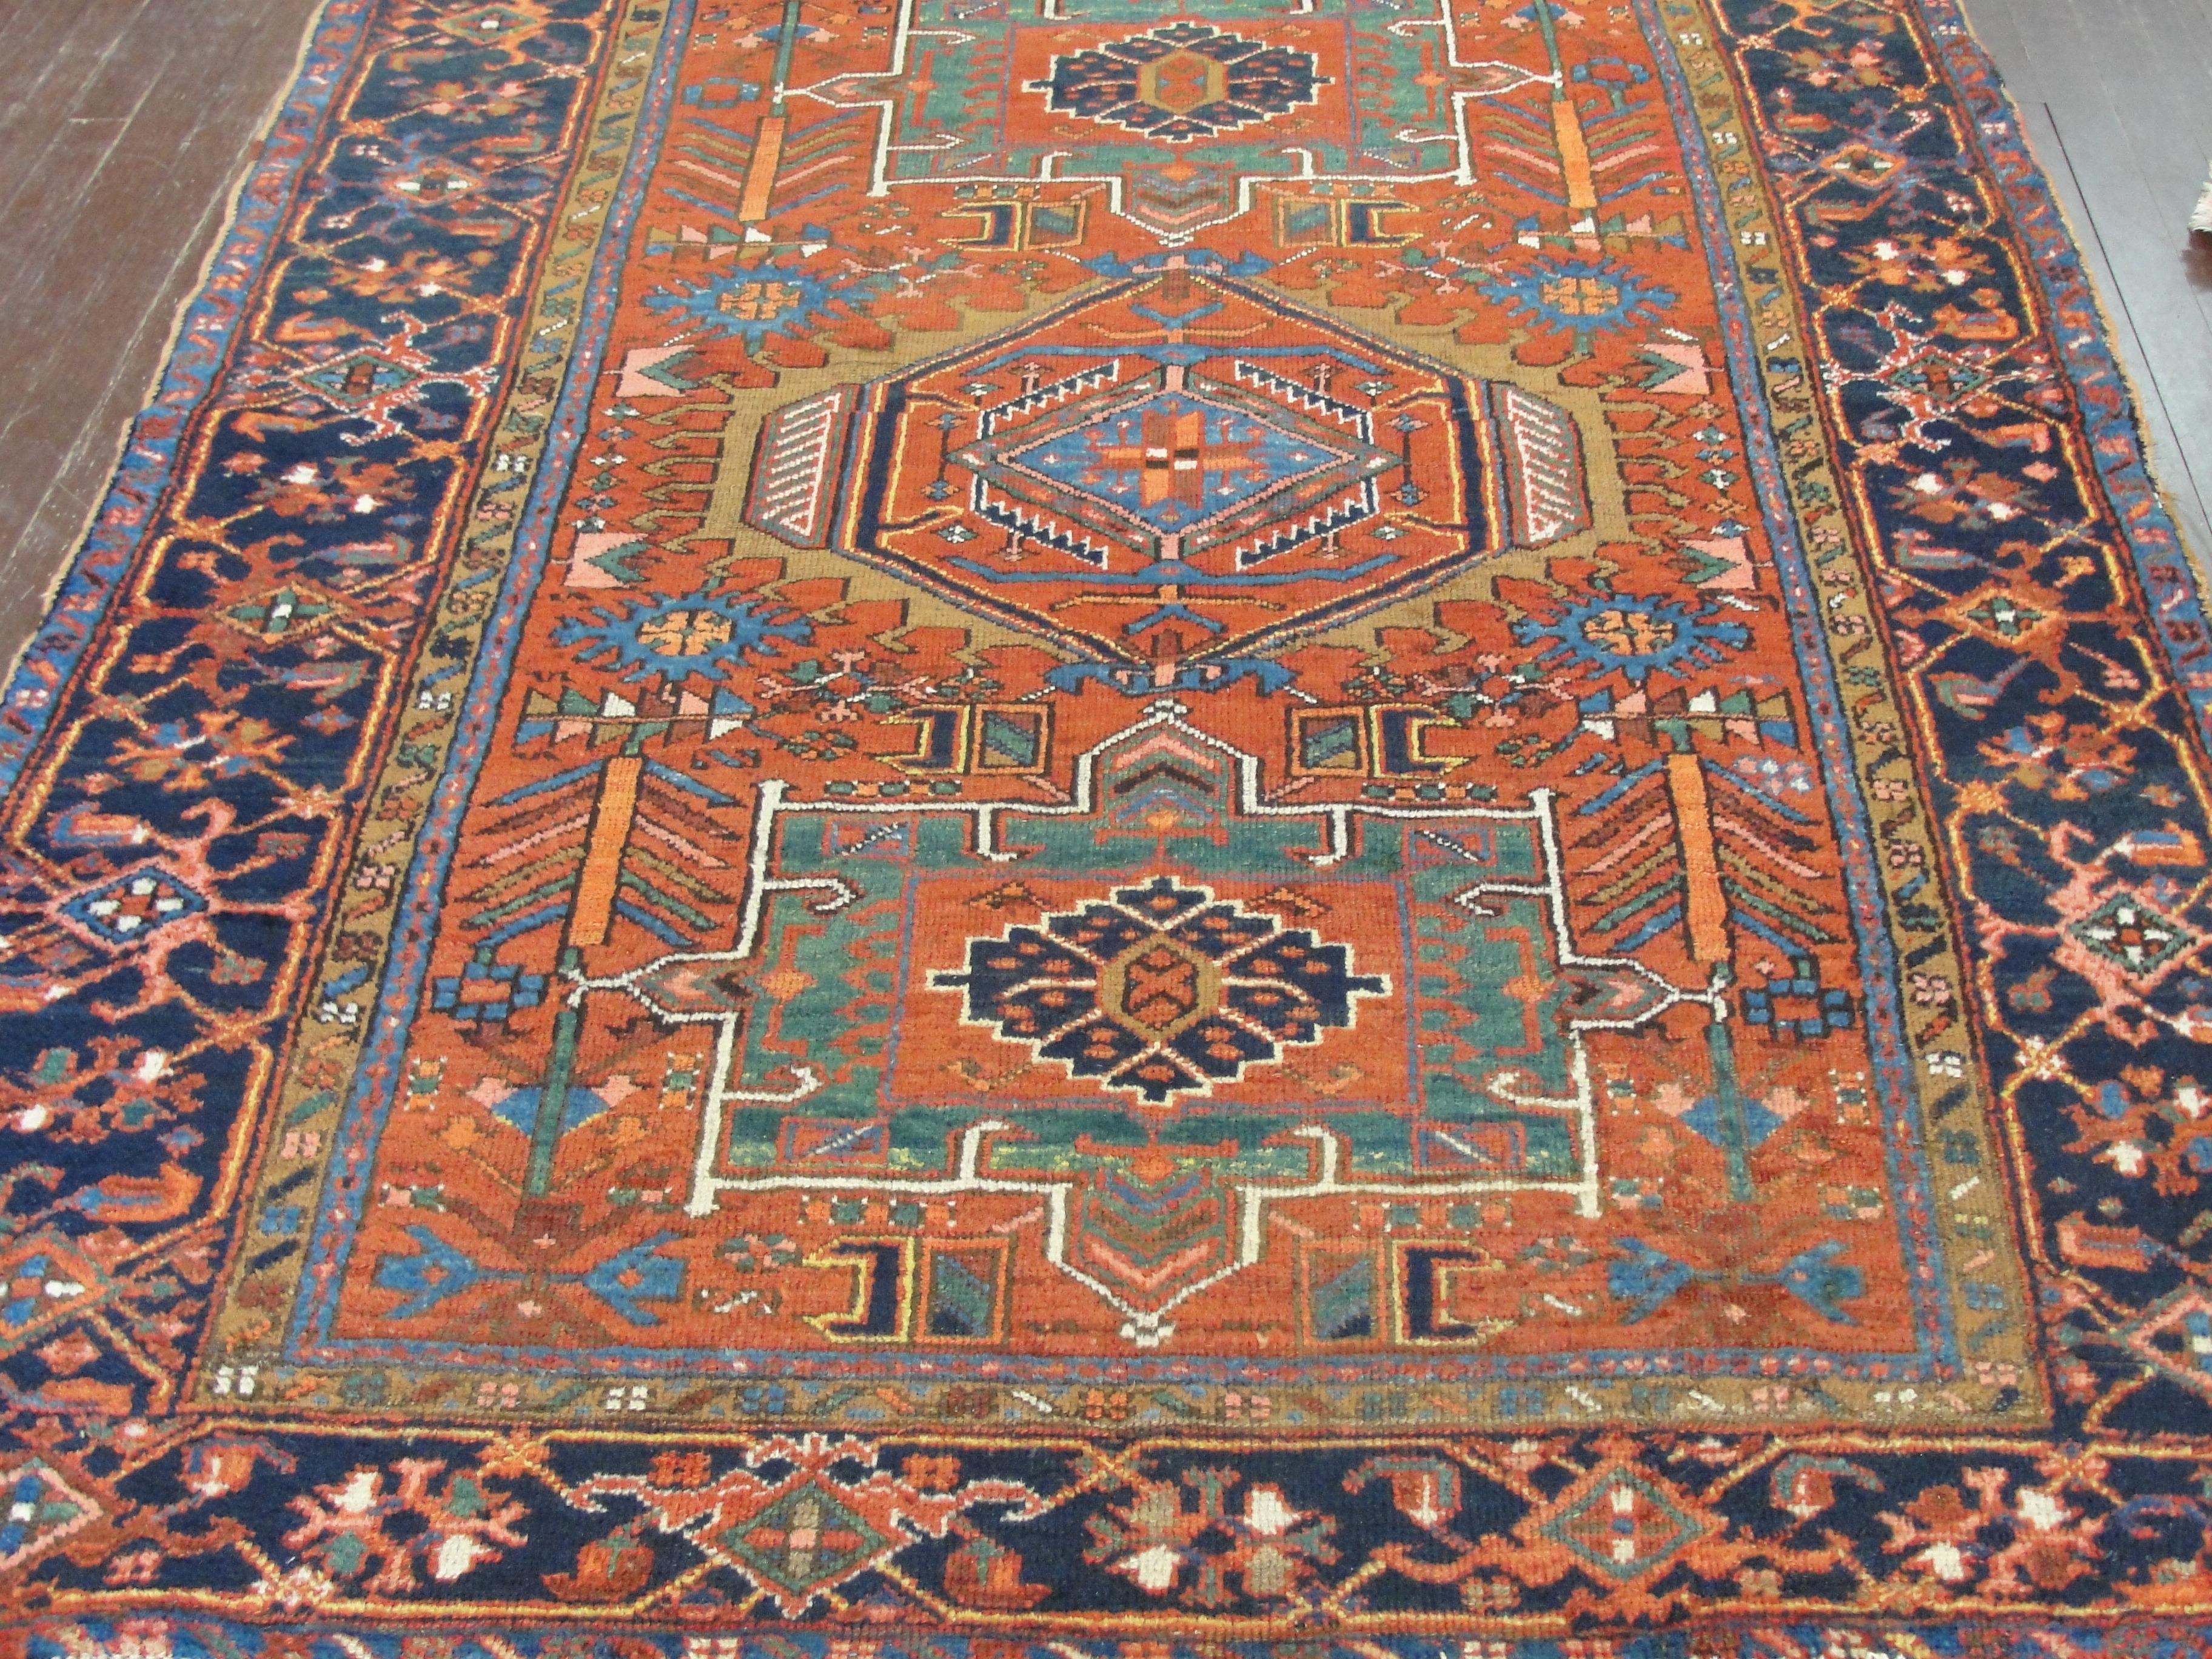  Antique Persian Karajah Rug, Amazing colors. 1